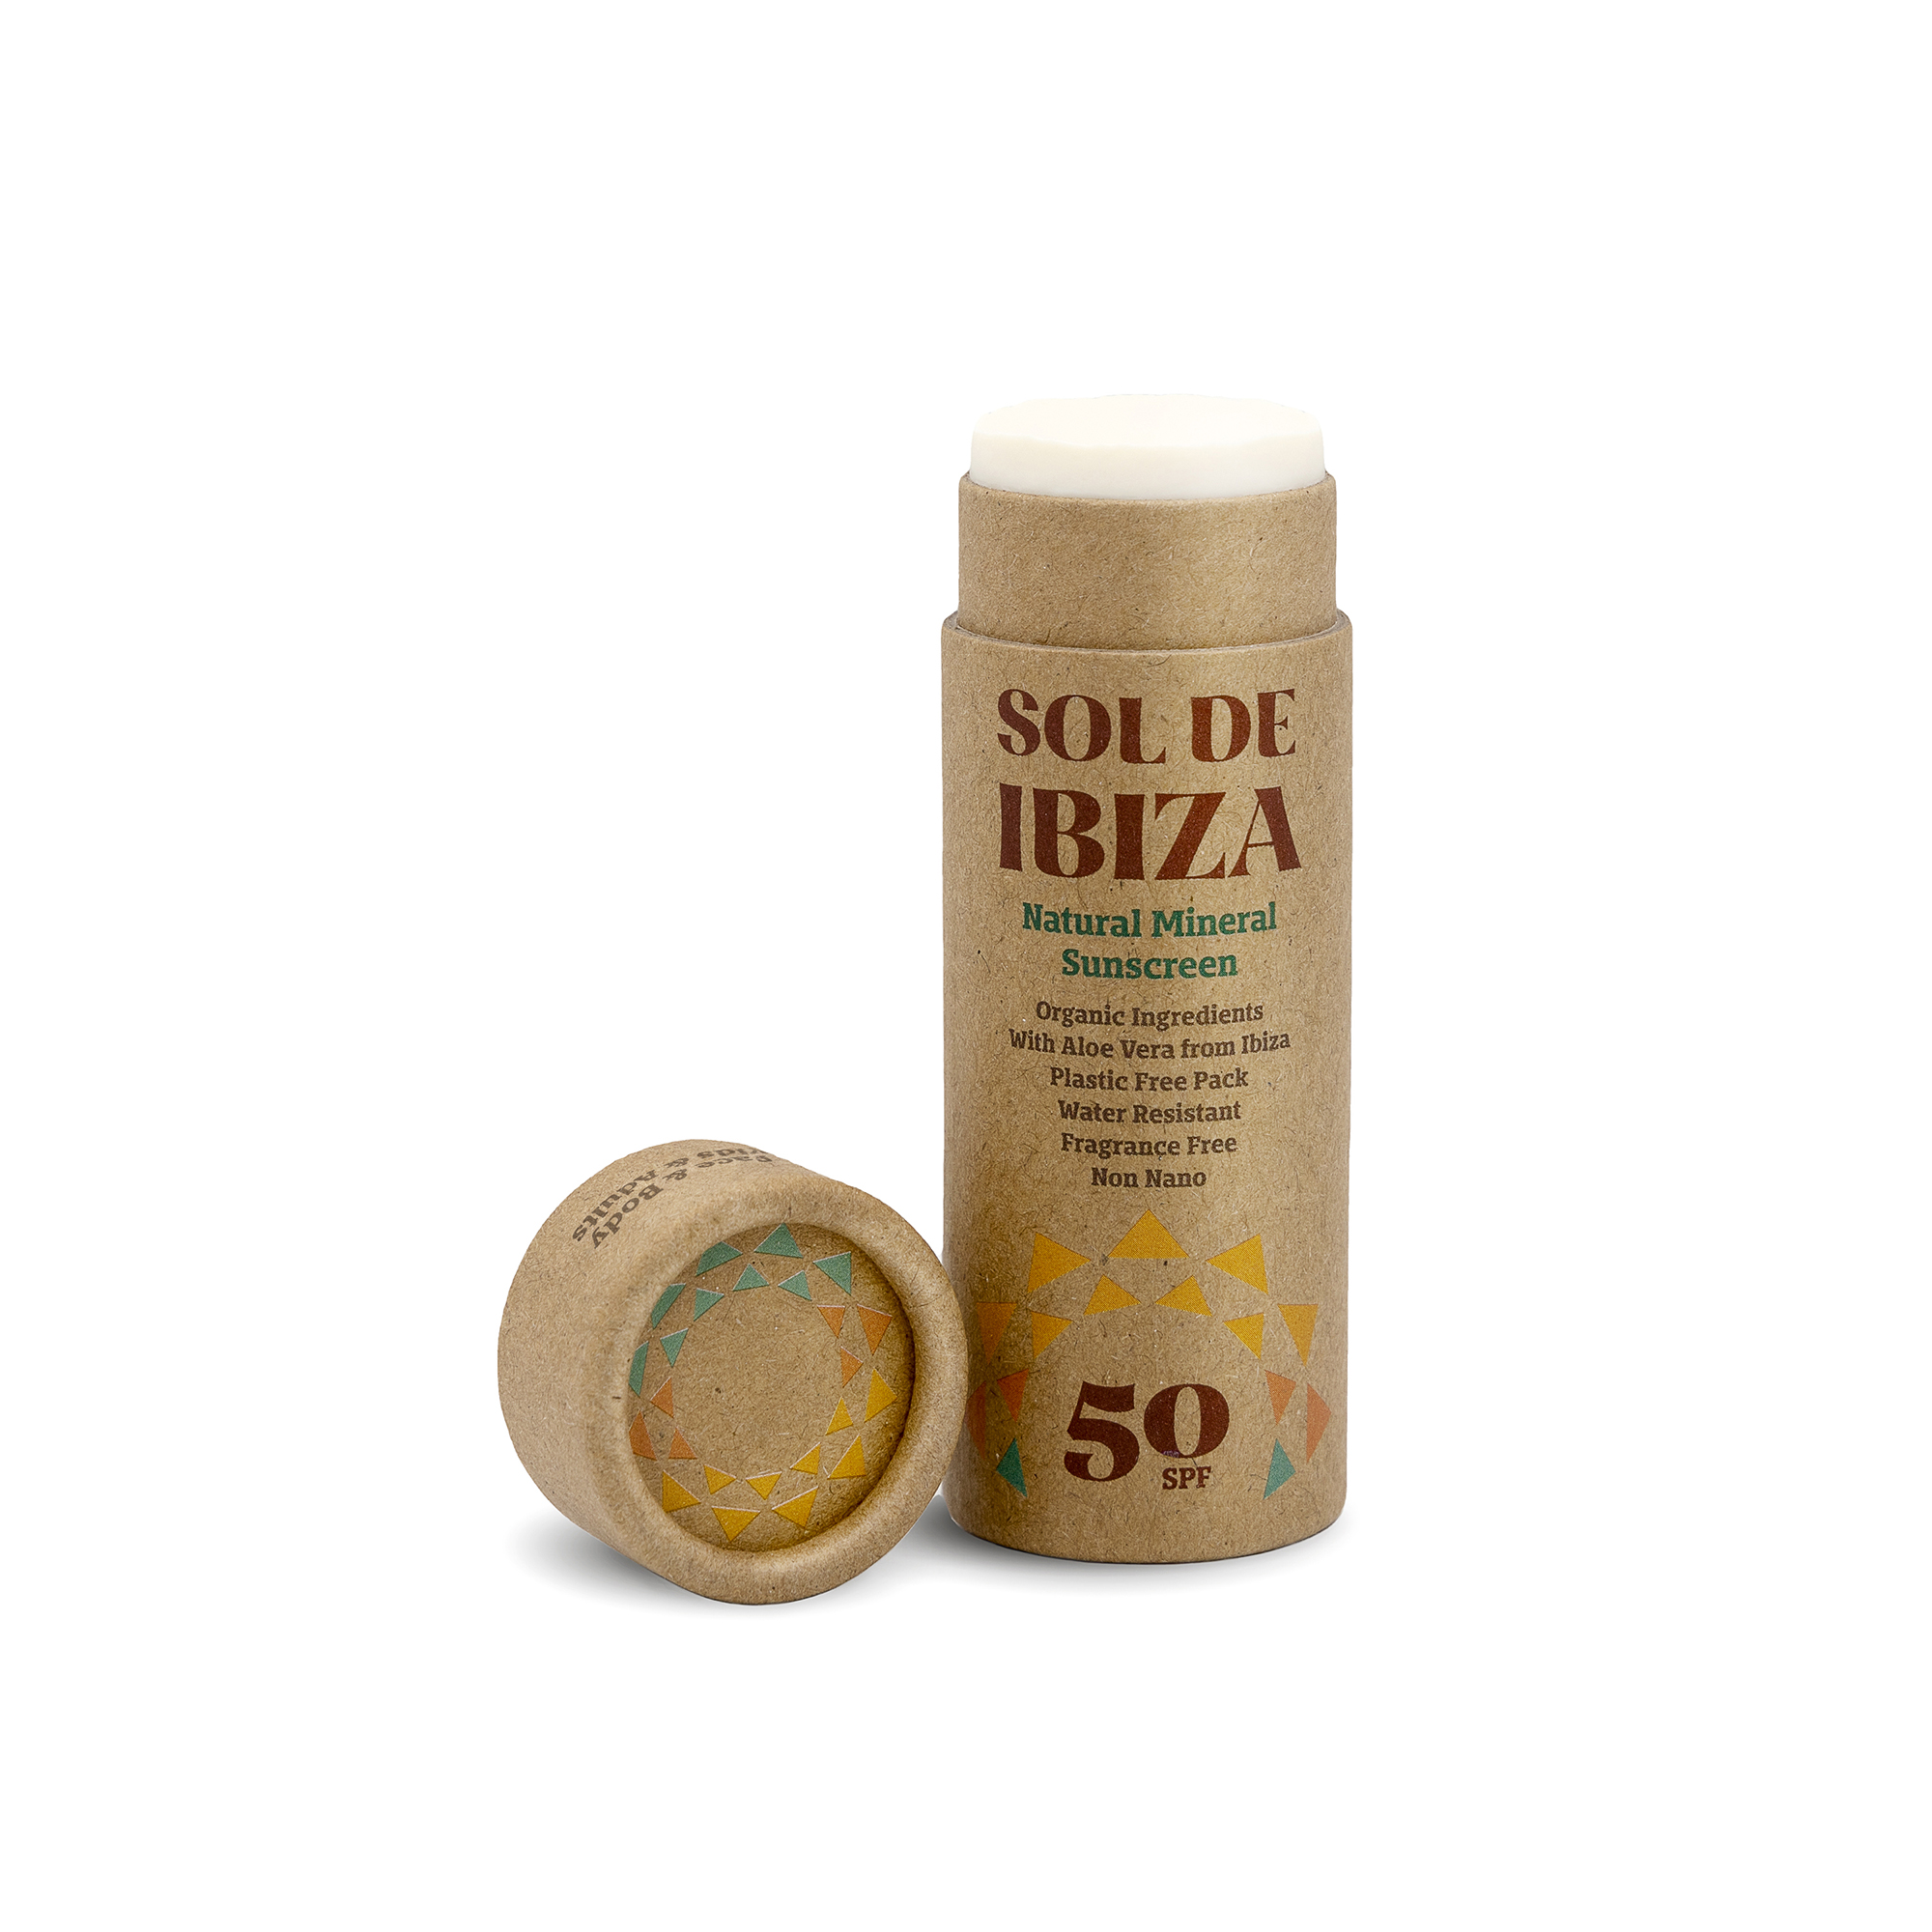 Wholesale Sol de Ibiza zero waste natural sunscreen